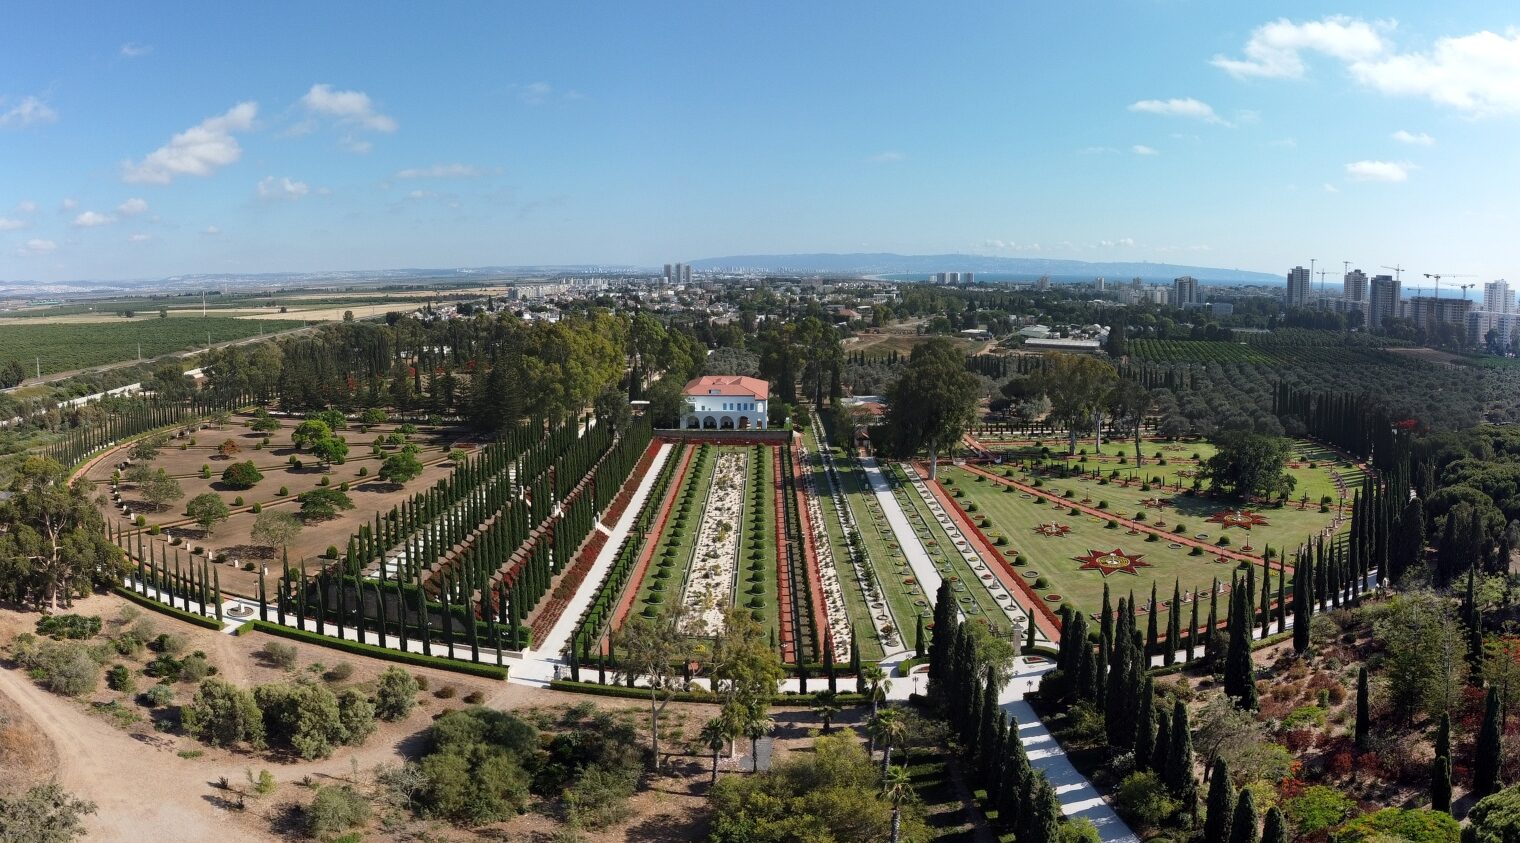 Photo of the Bahá’í Gardens in Akko by Eli Schwartz via Shutterstock.com